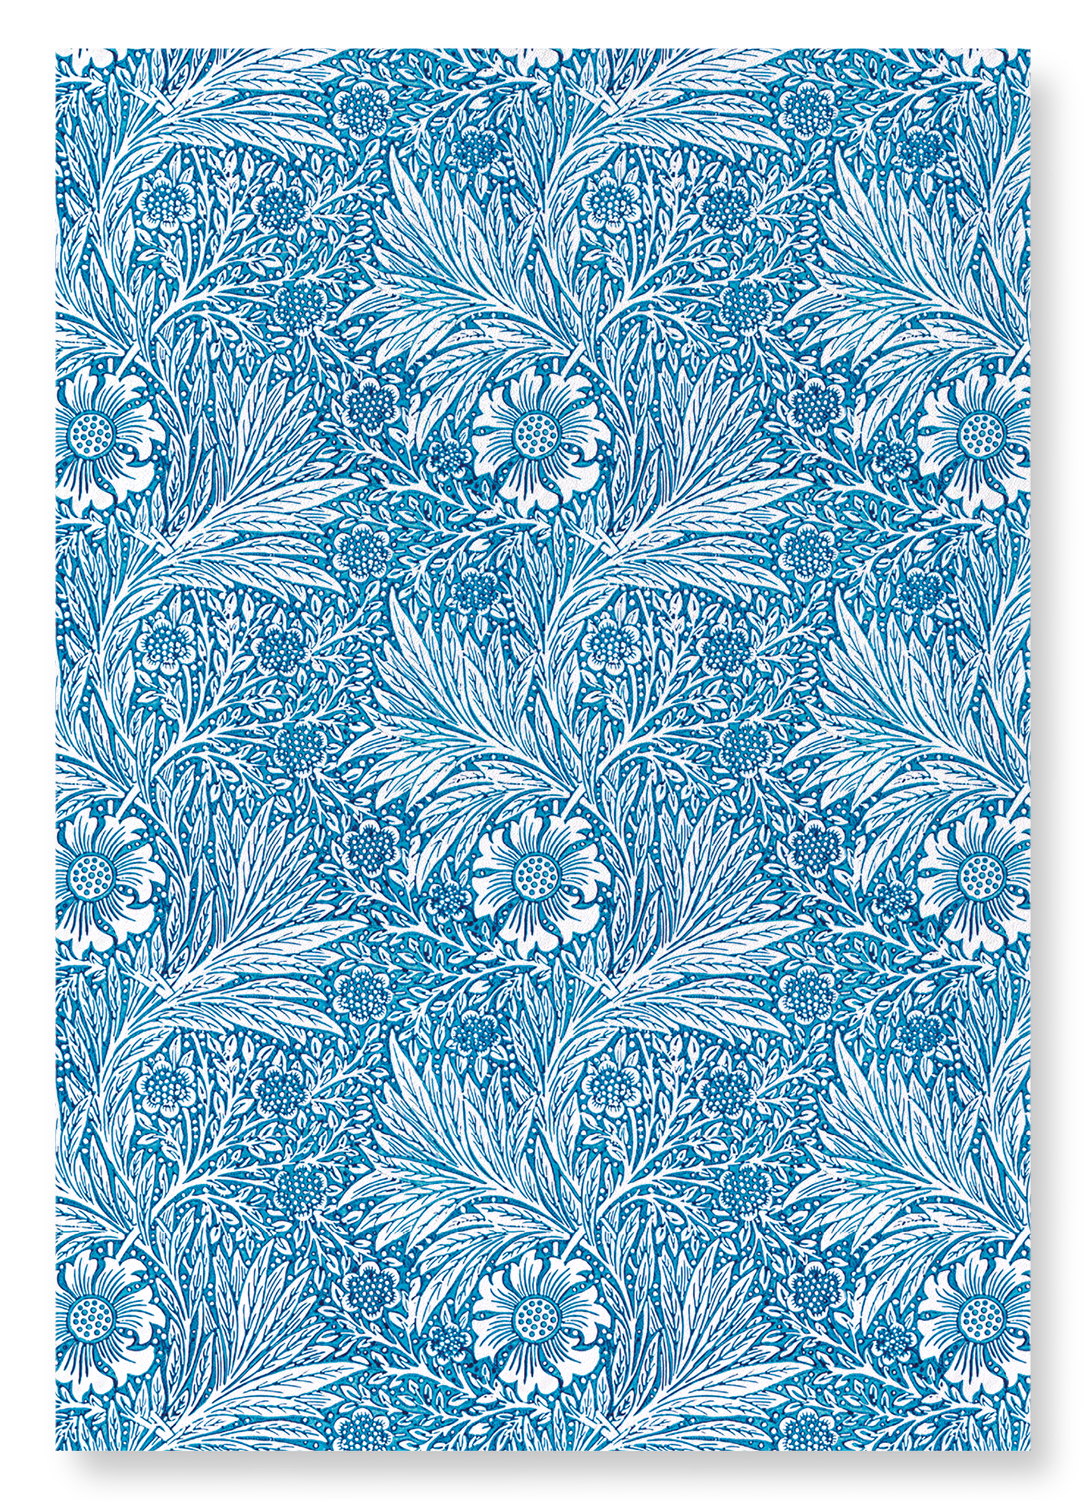 BLUE MARIGOLD: Pattern Art Print